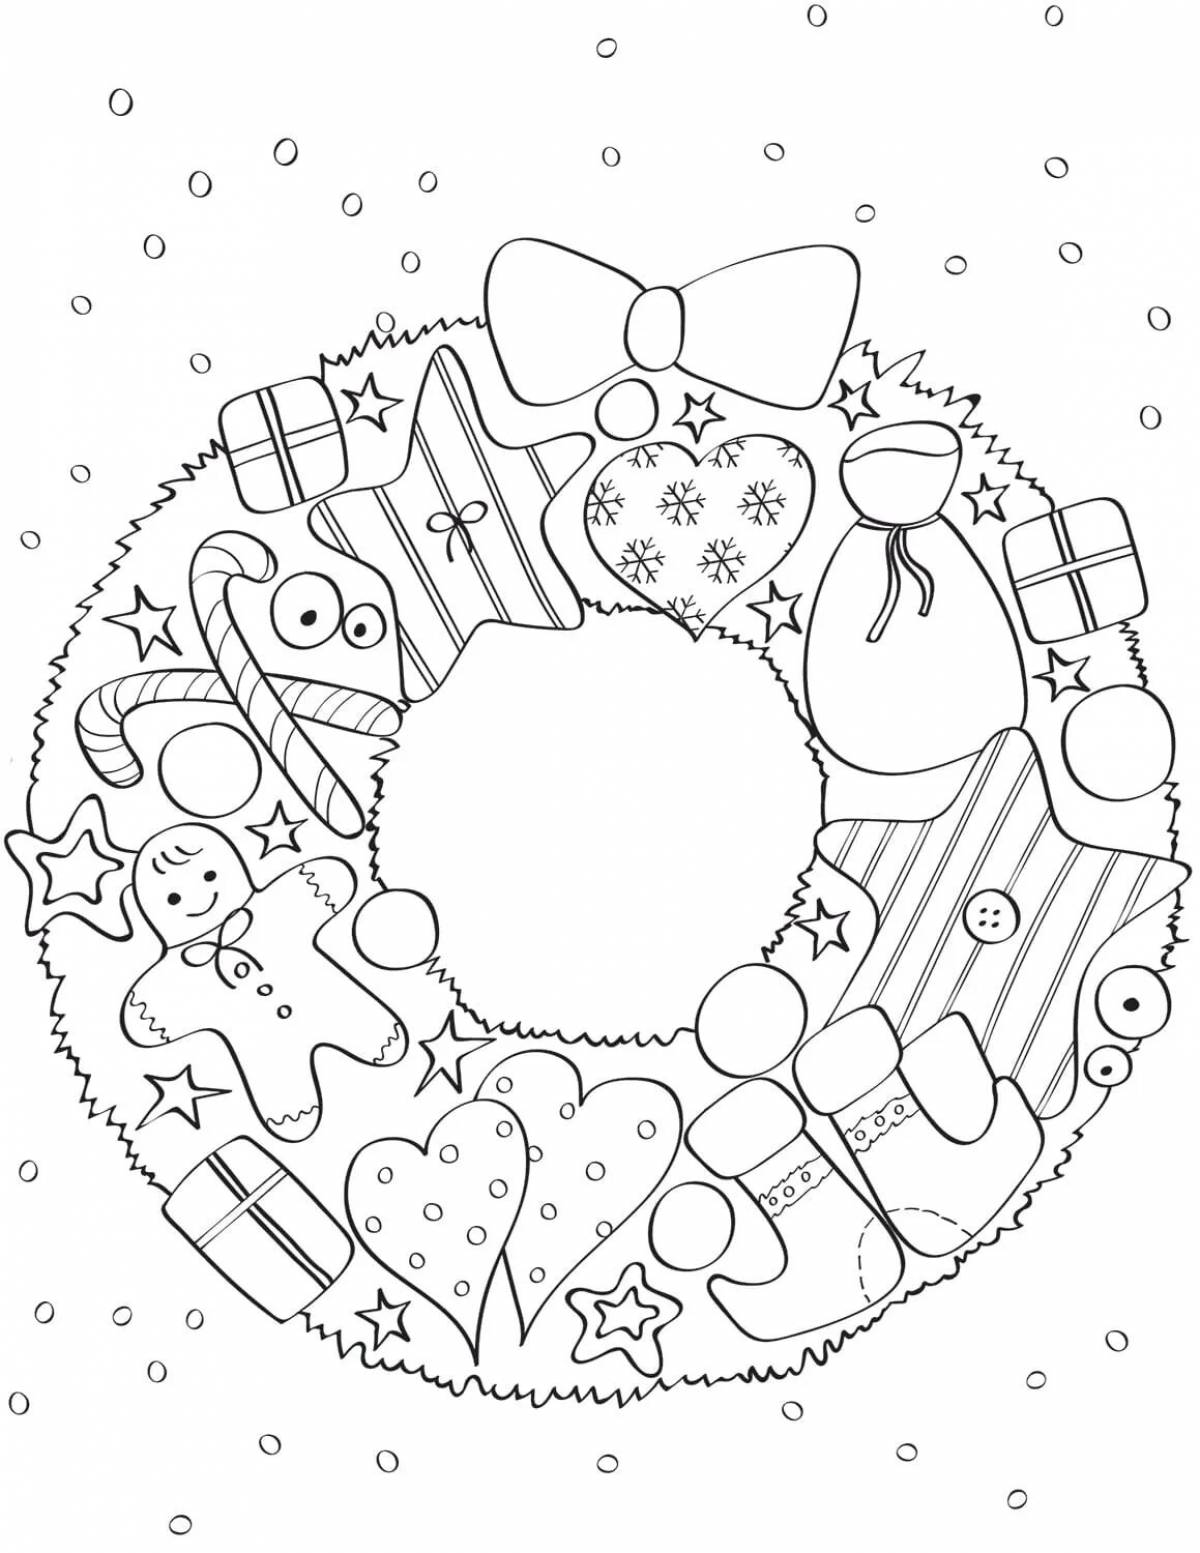 Children's Christmas wreath #5